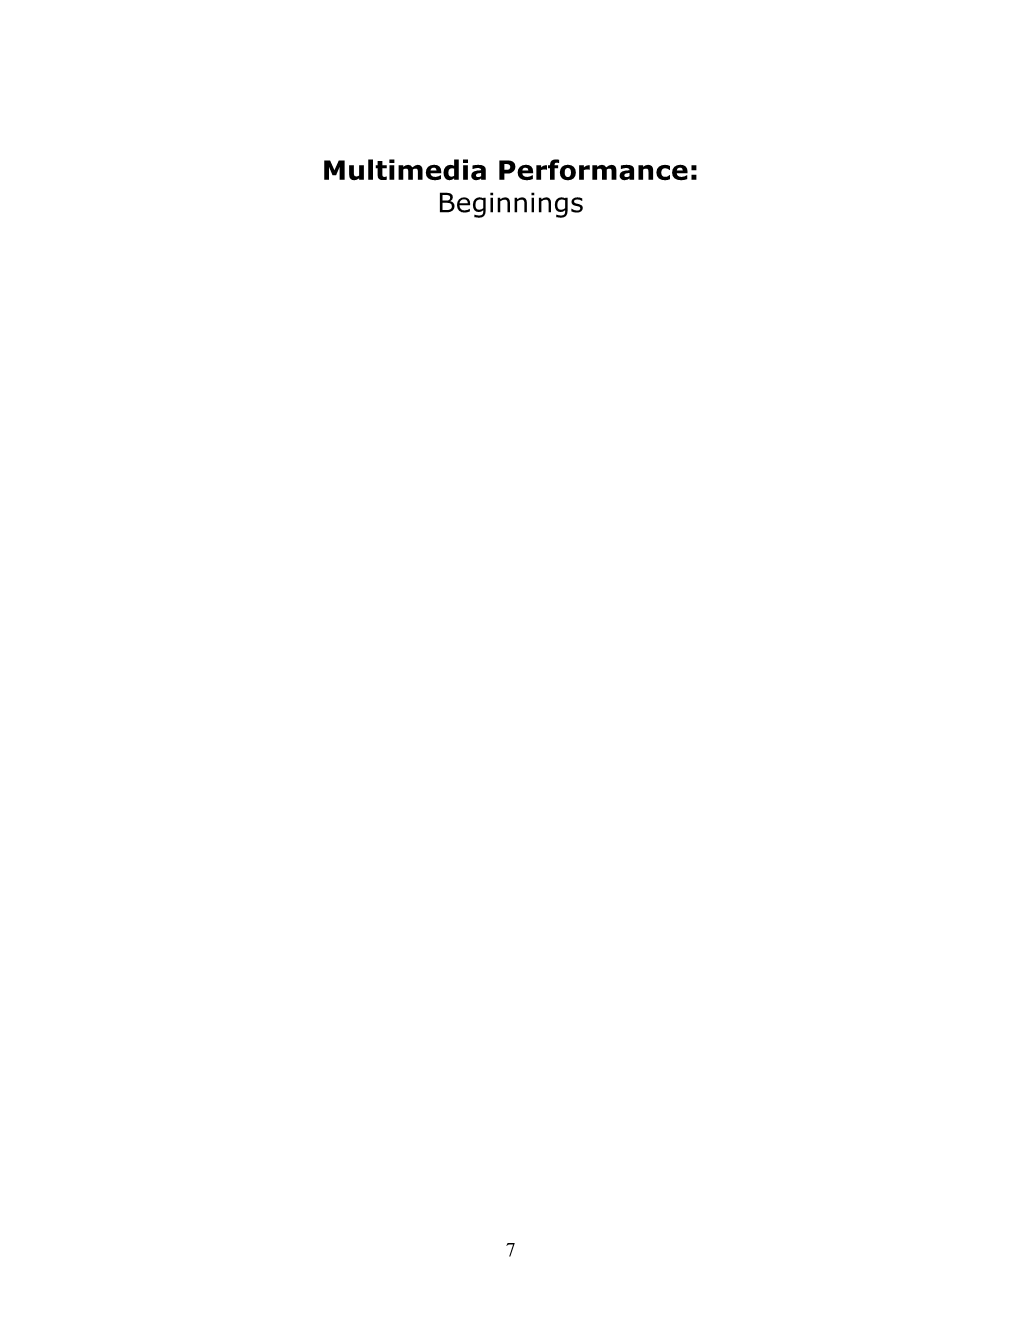 Multimedia Performance: Beginnings